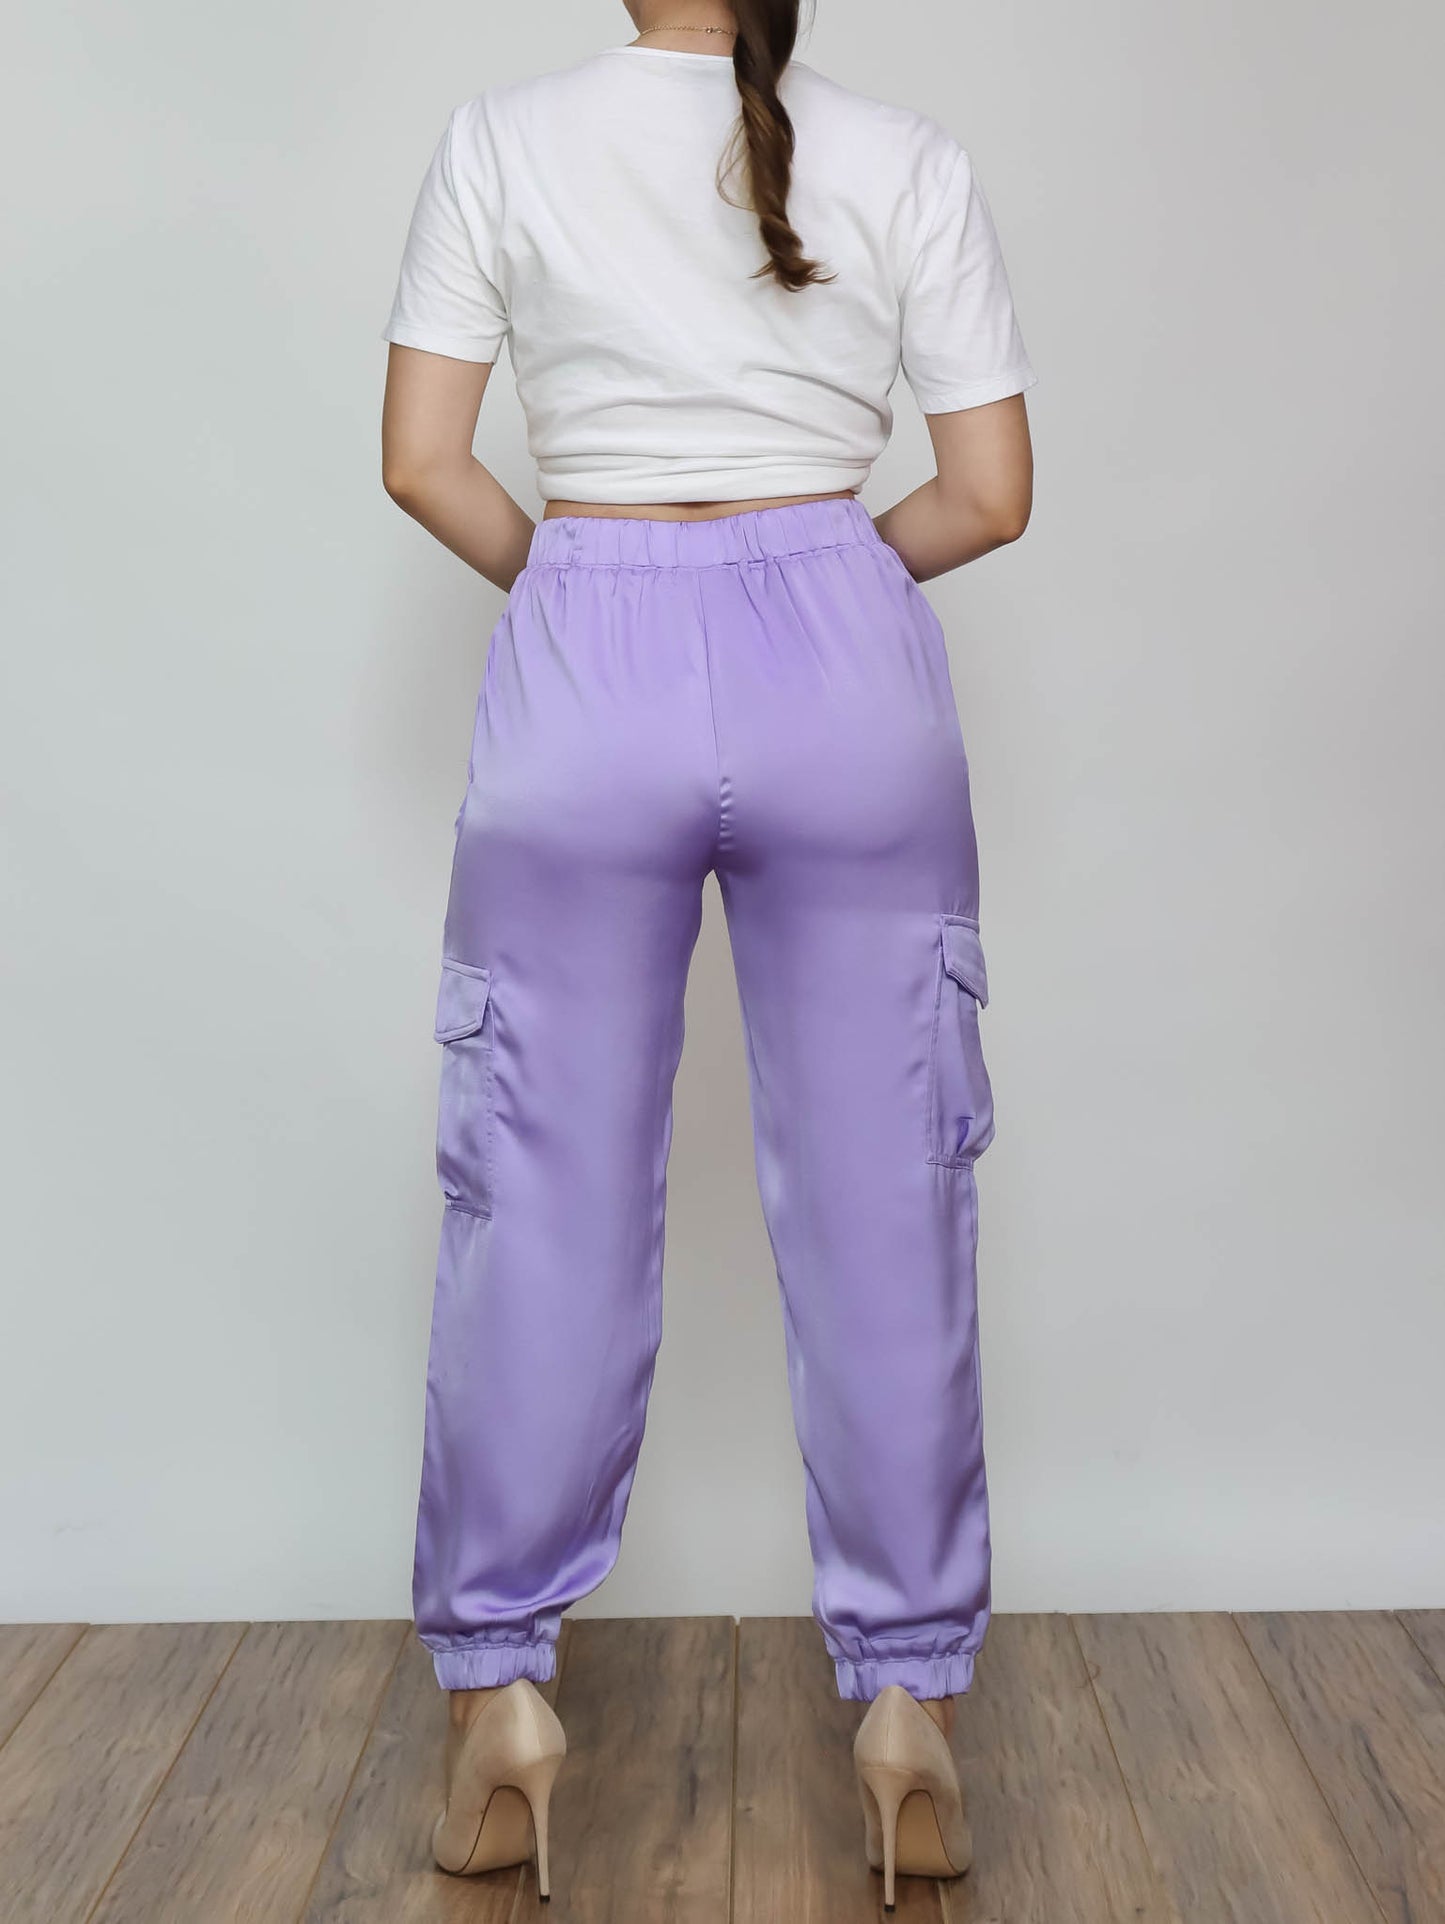 Pantalon tipo jogger lila